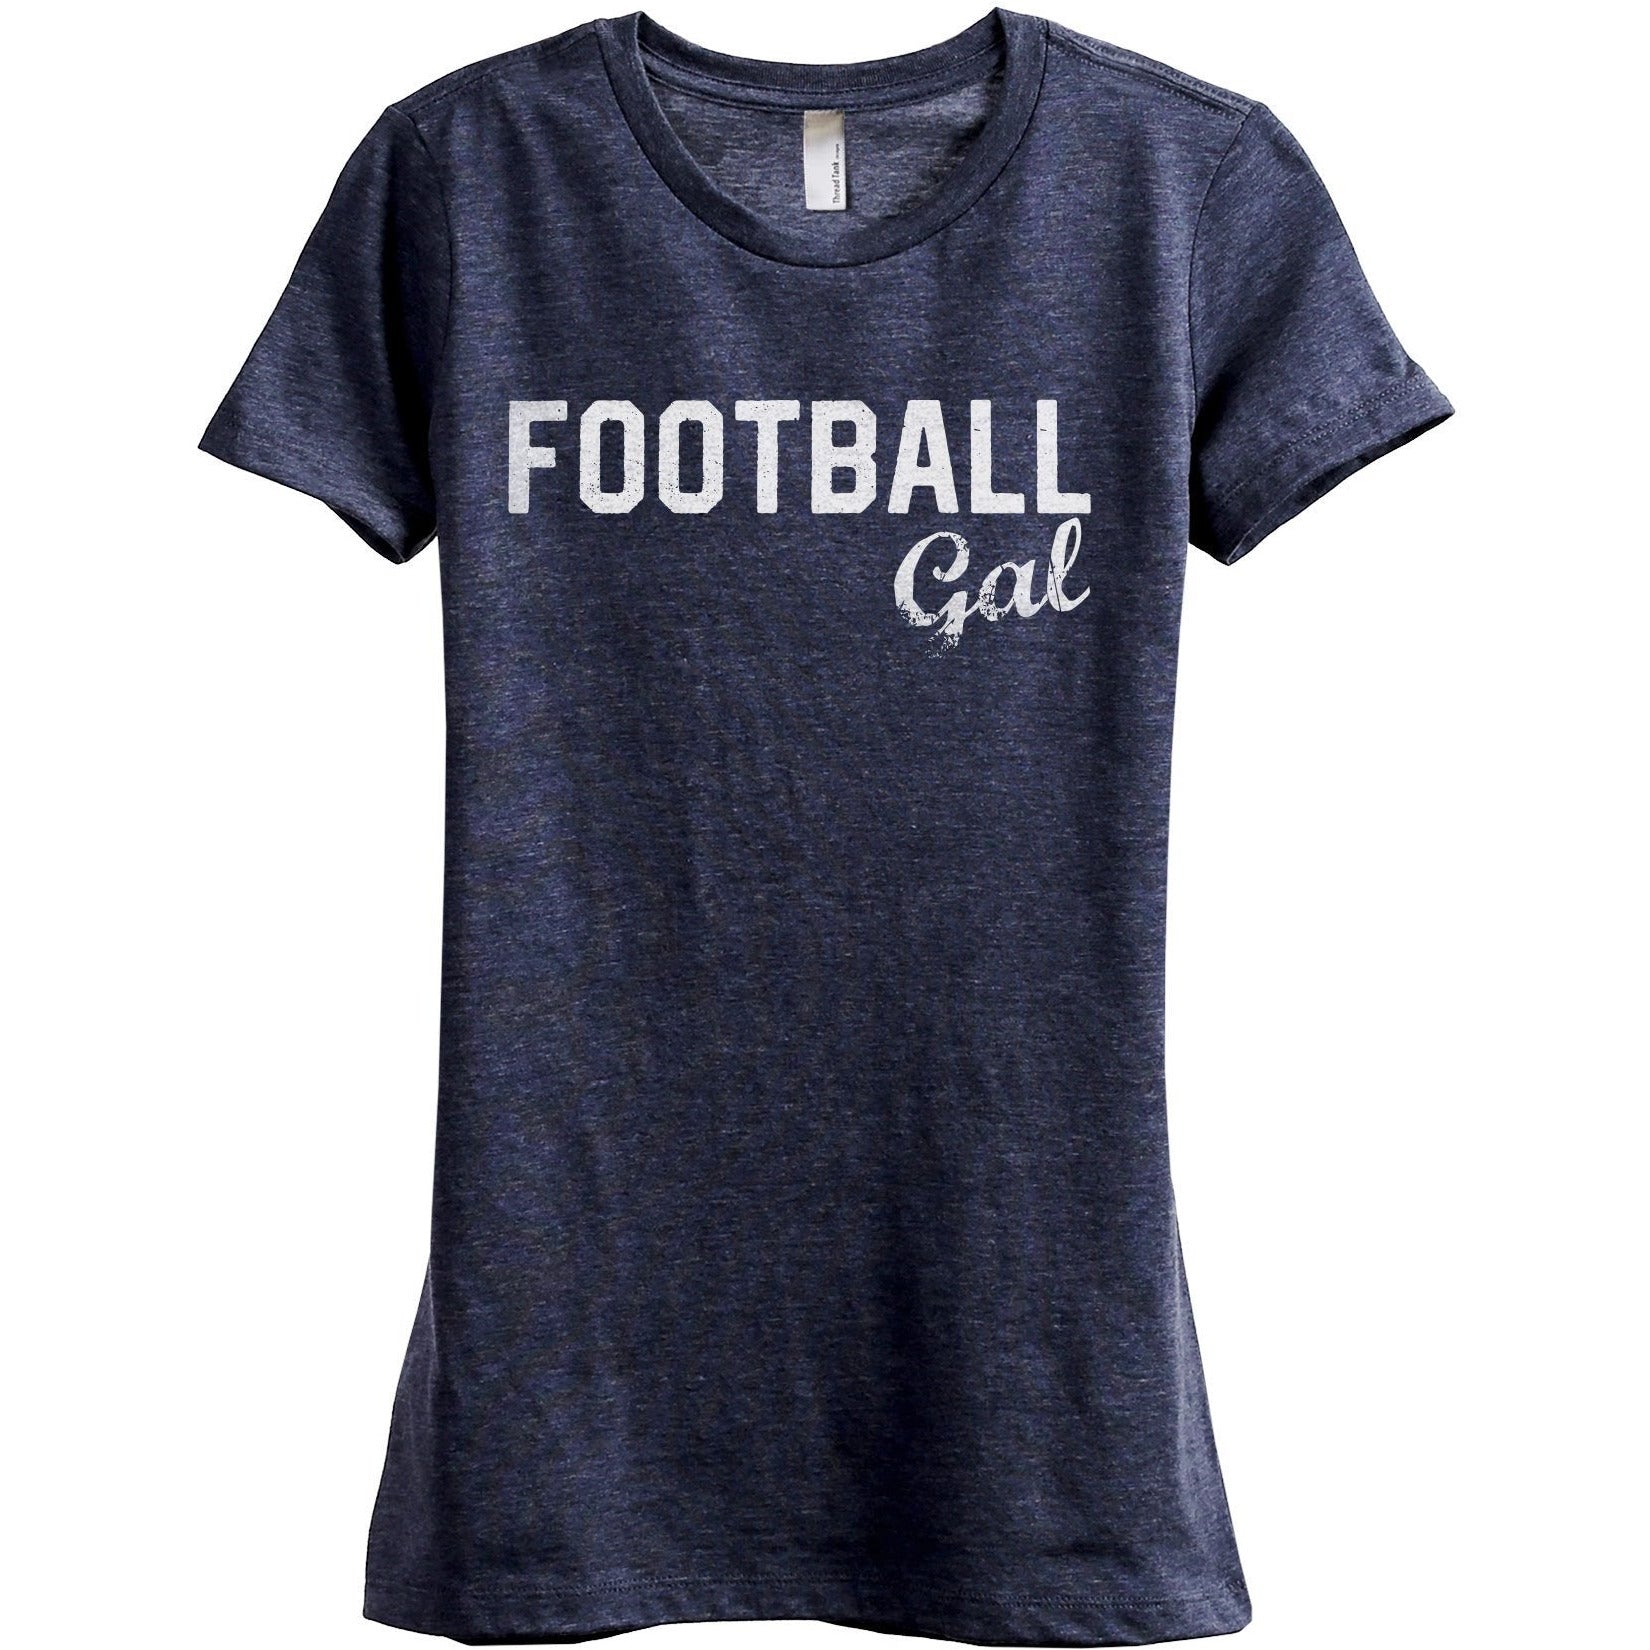 Football Gal Women's Relaxed Crewneck T-Shirt Top Tee Heather Navy Grey
